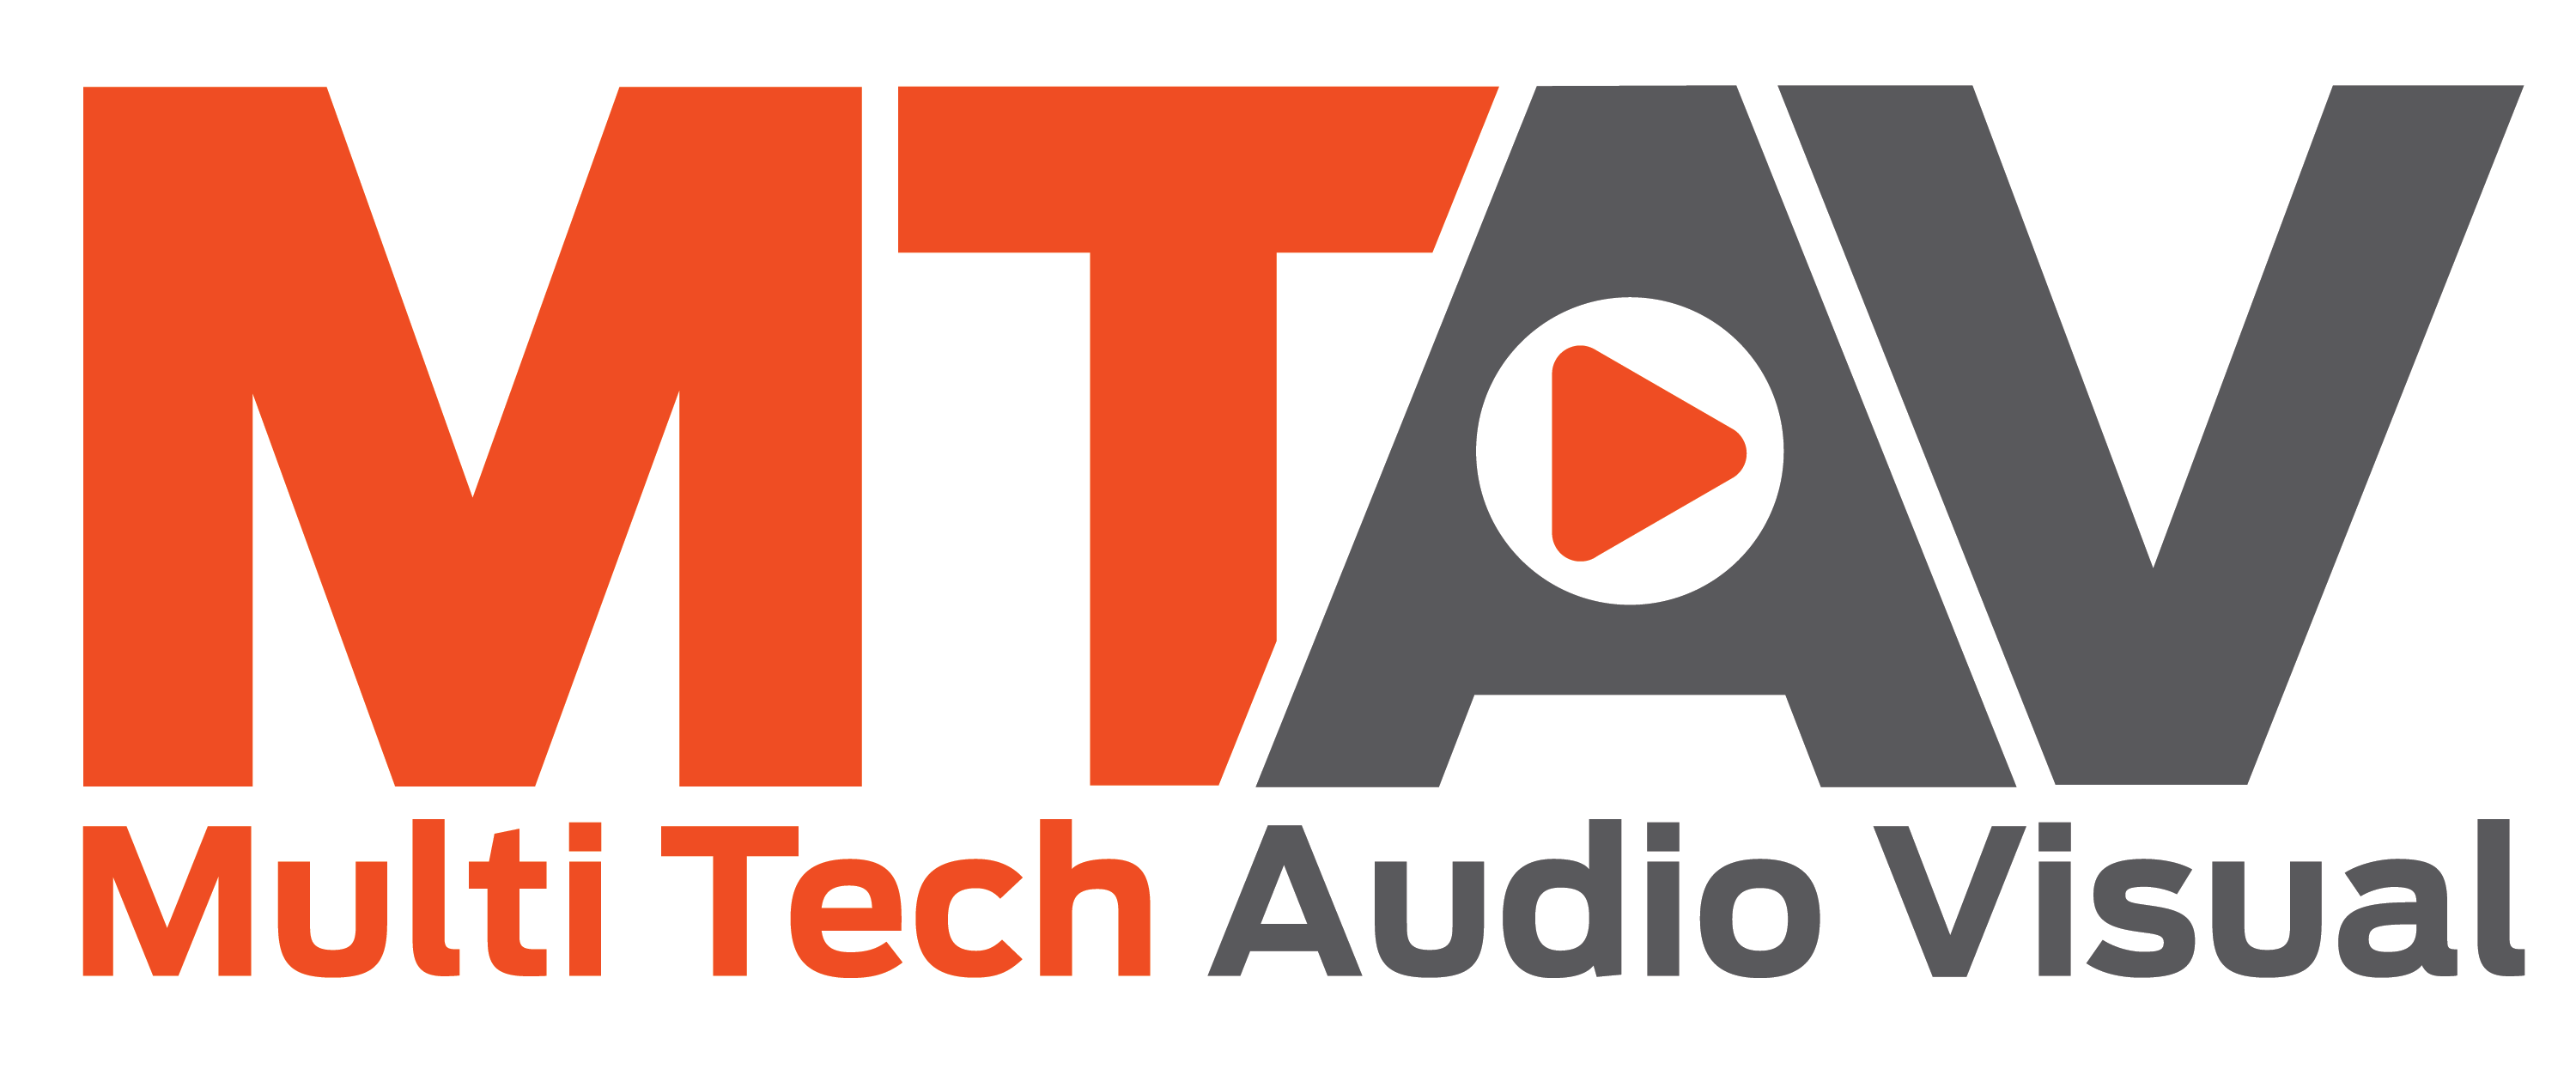 Multi Tech Audio Visual logo